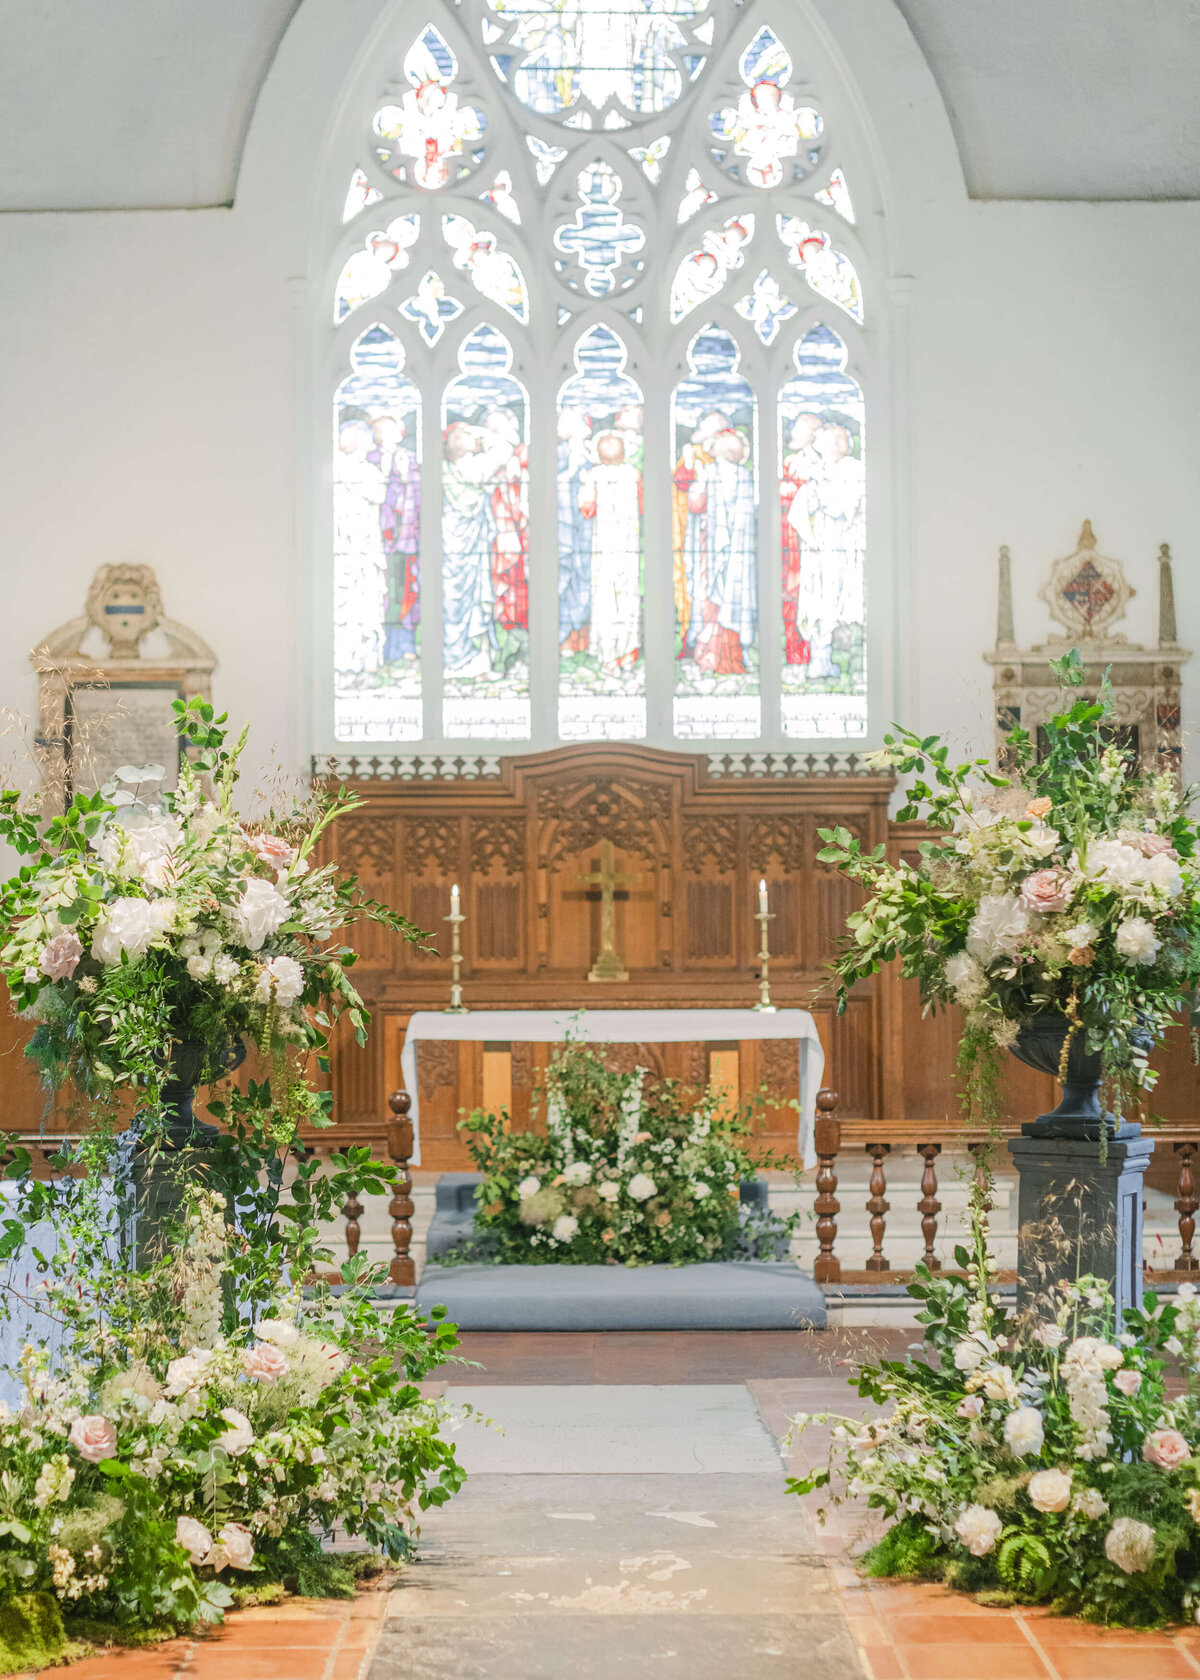 chloe-winstanley-weddings-english-church-ceremony-flowers